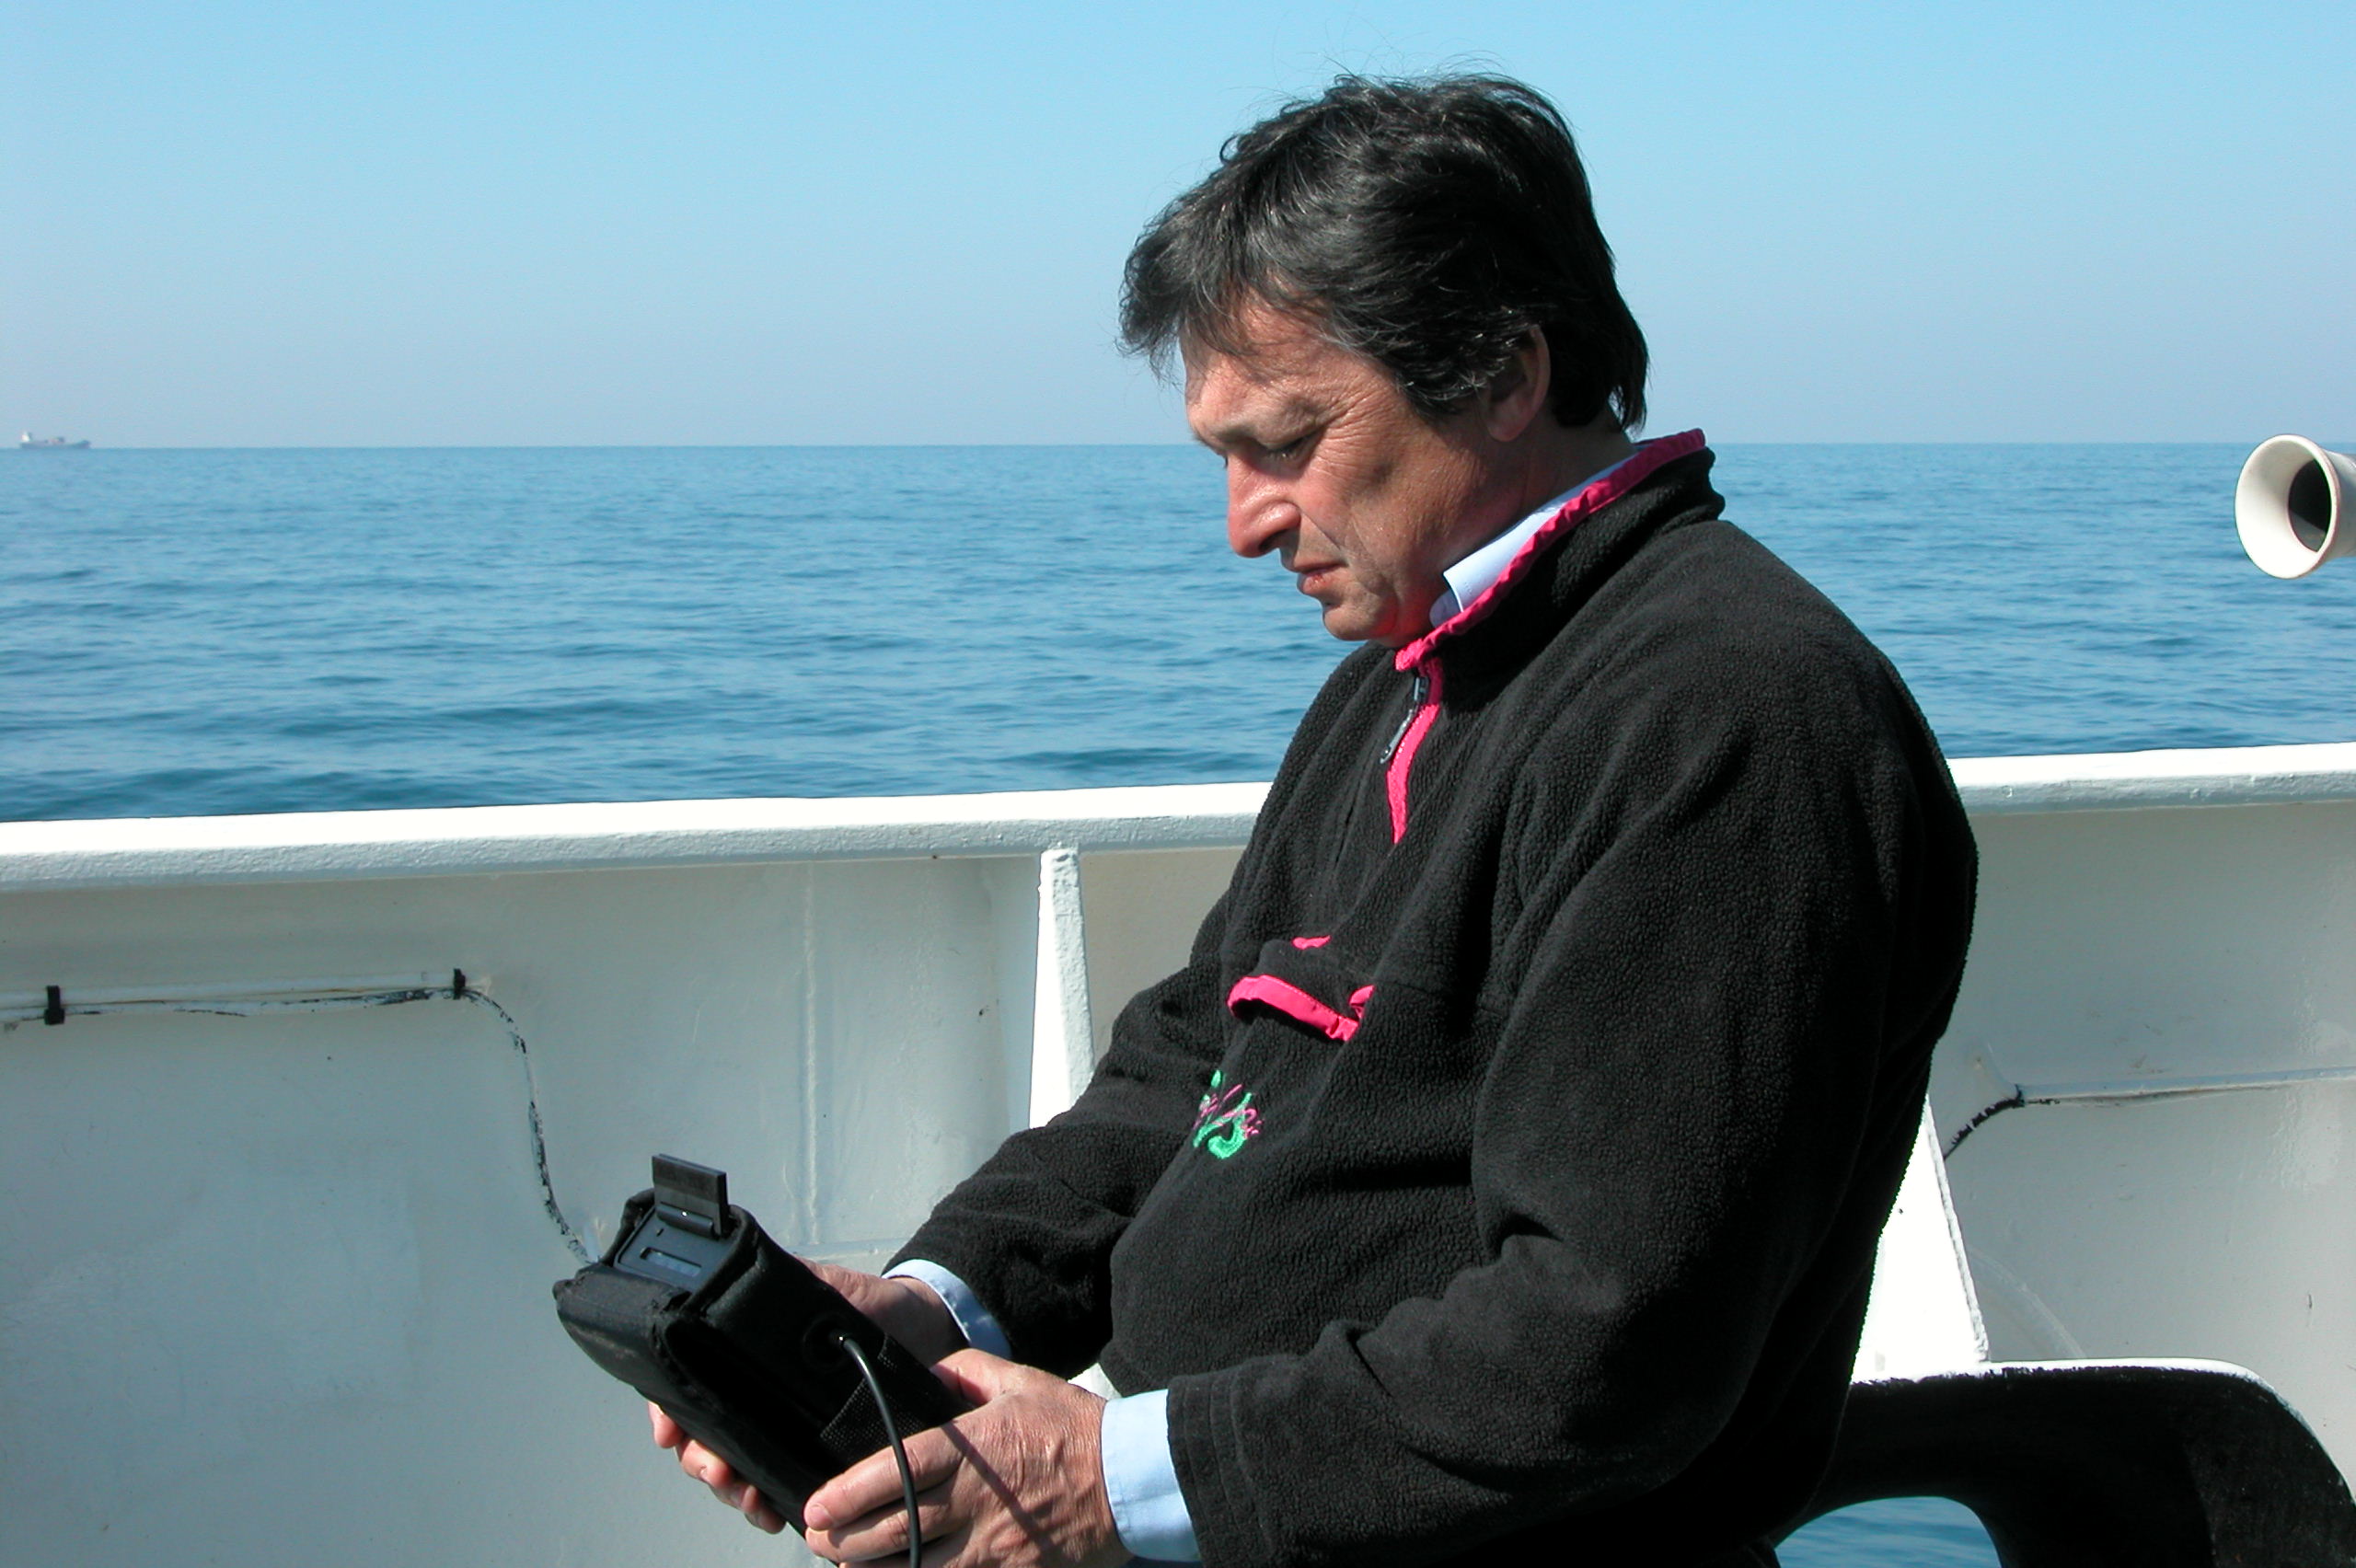 Measurements onboard: Dr. Giuseppe Zibordi 